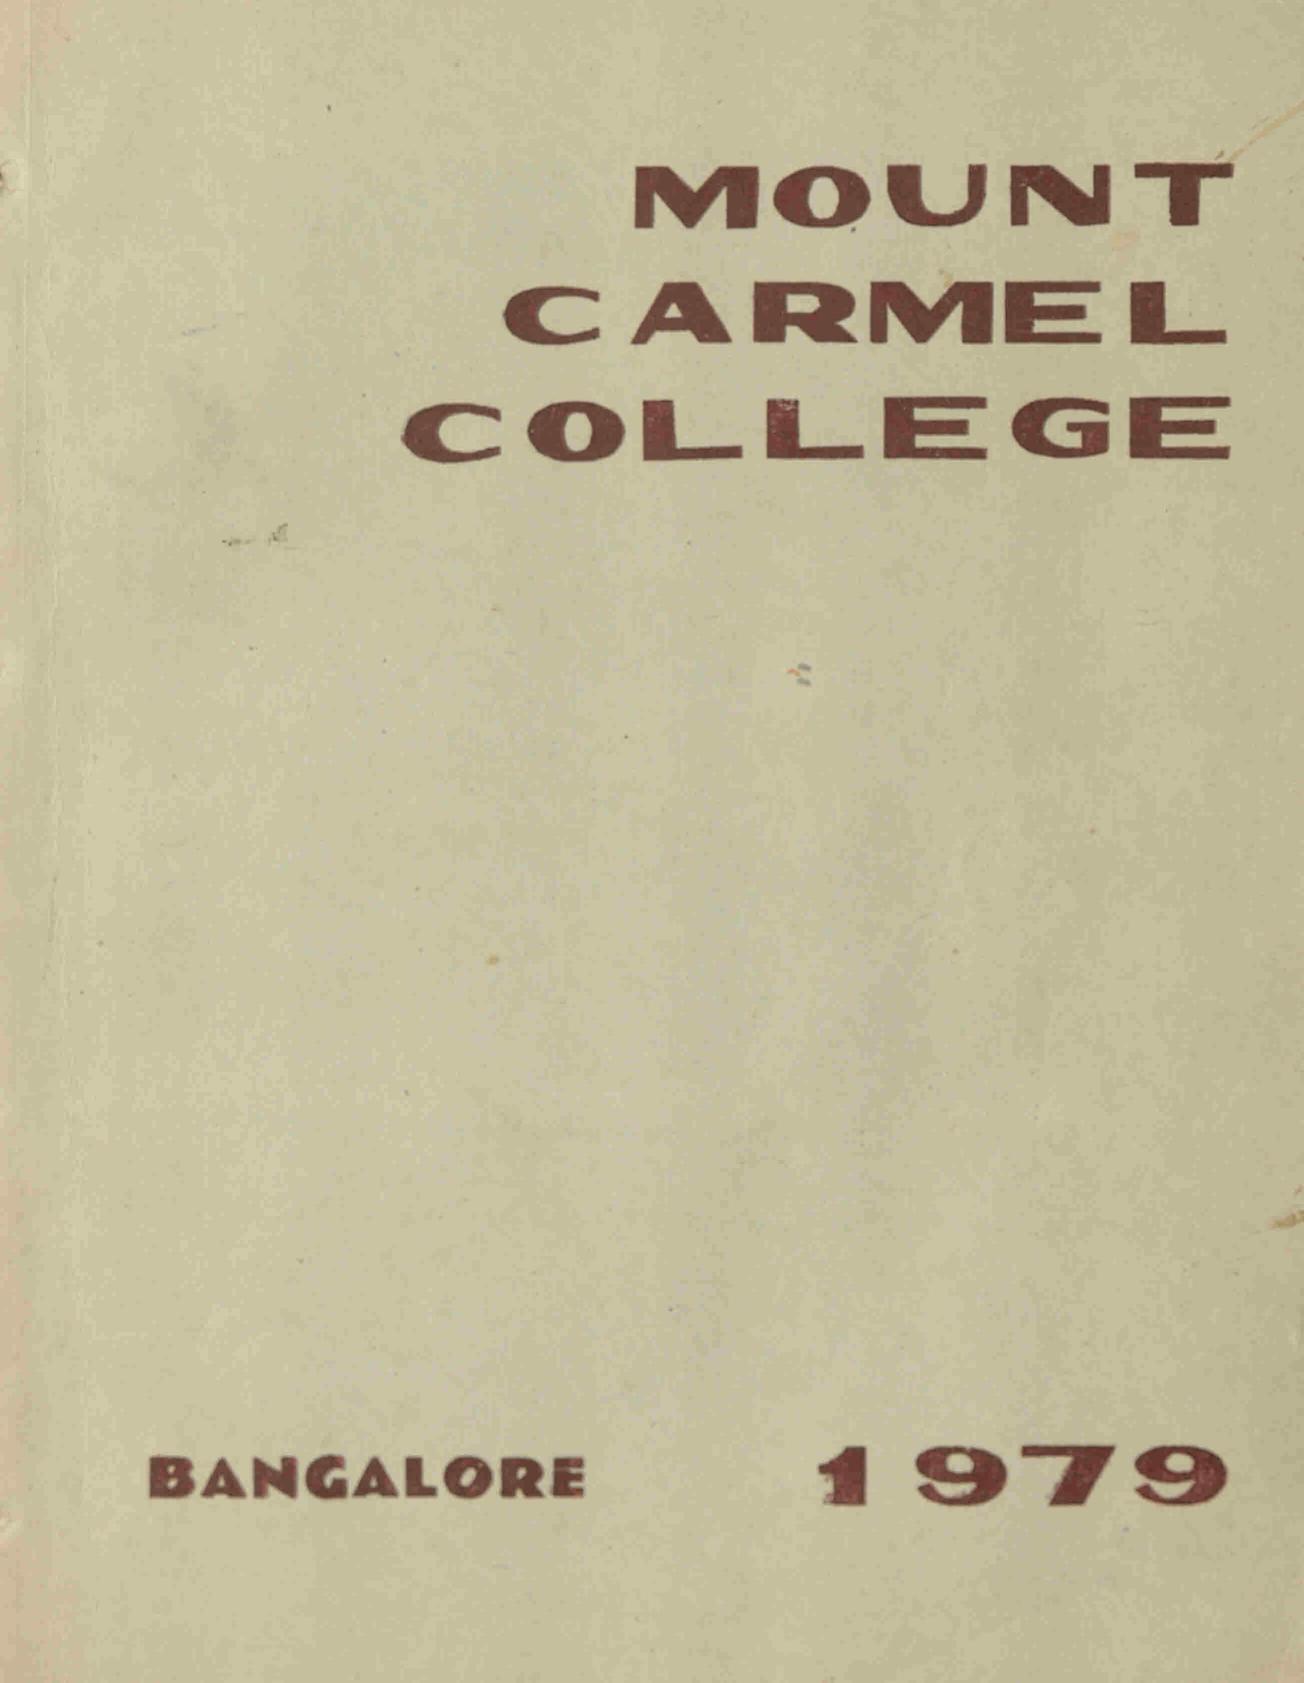  1979 - Mount Carmel College Bangalore Annual